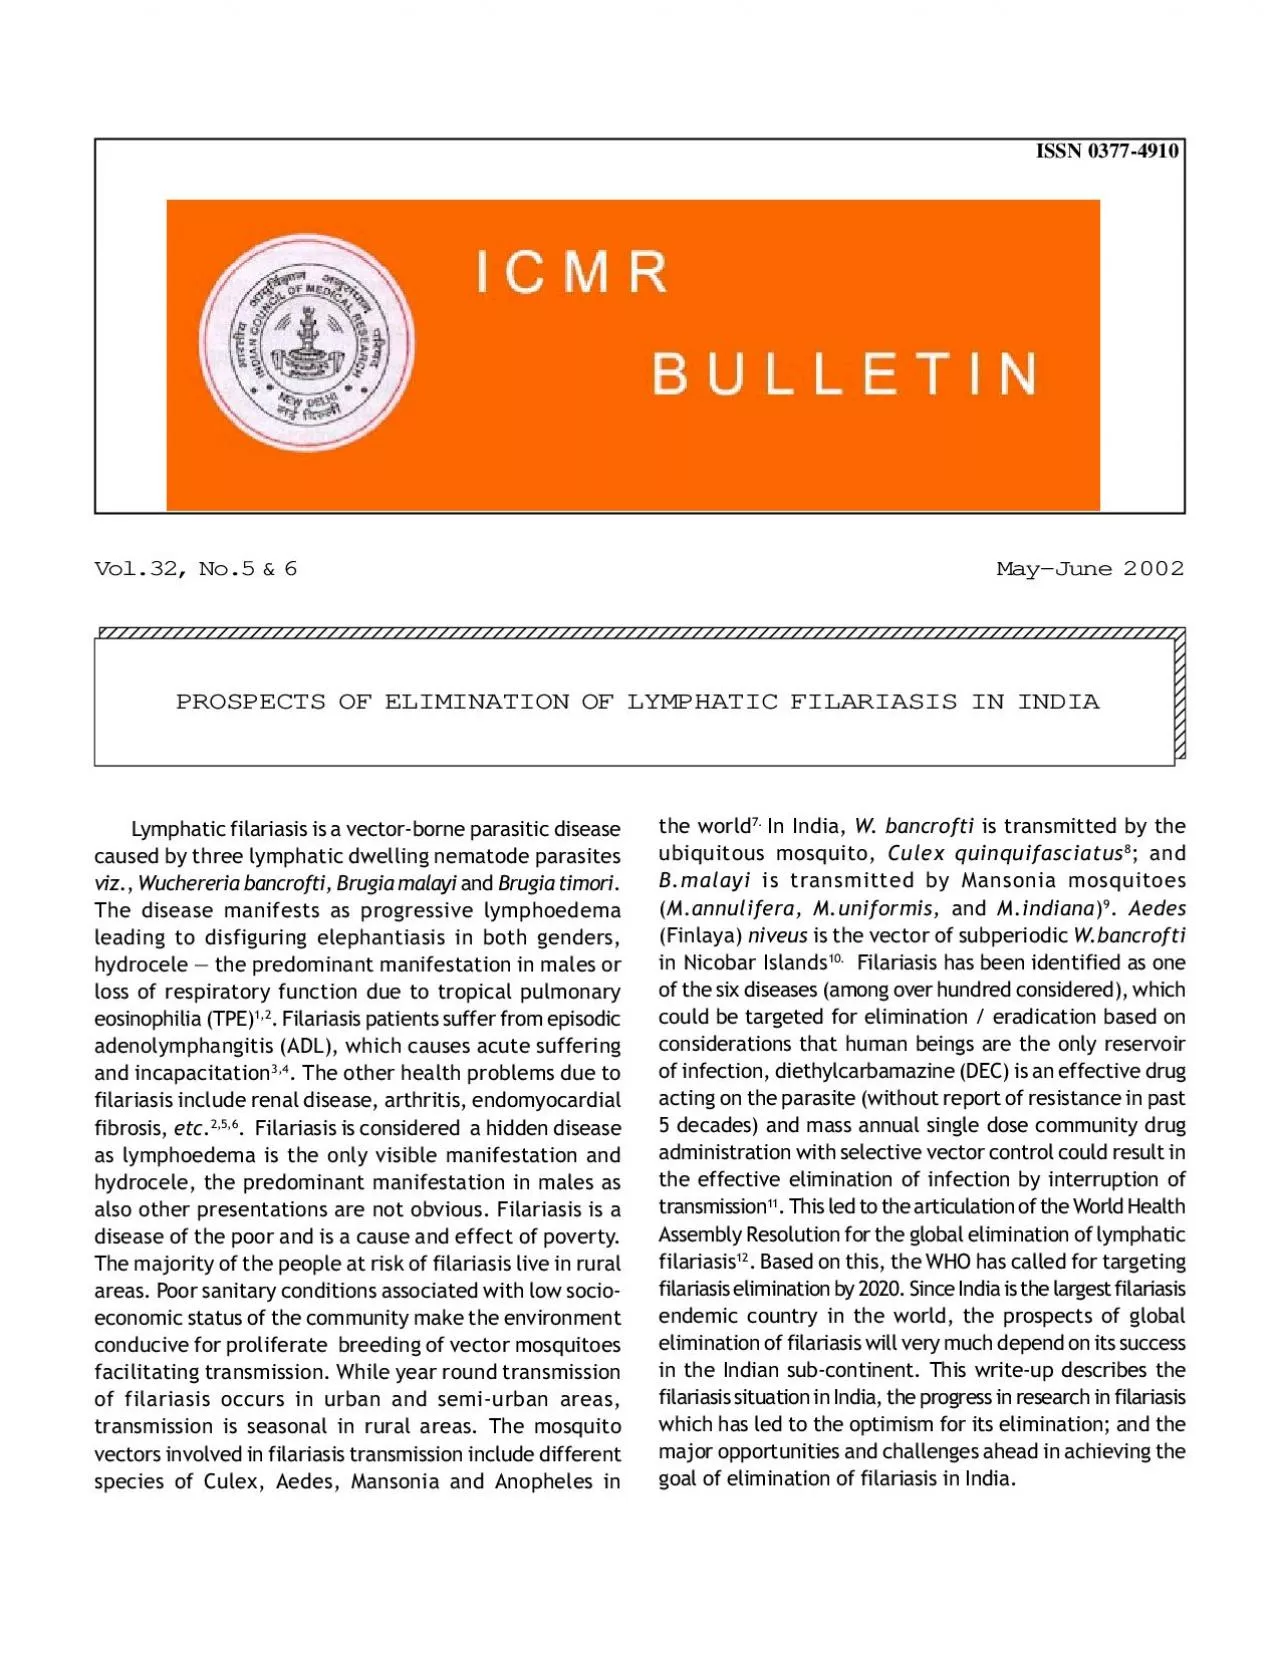 ICMR Bulletin